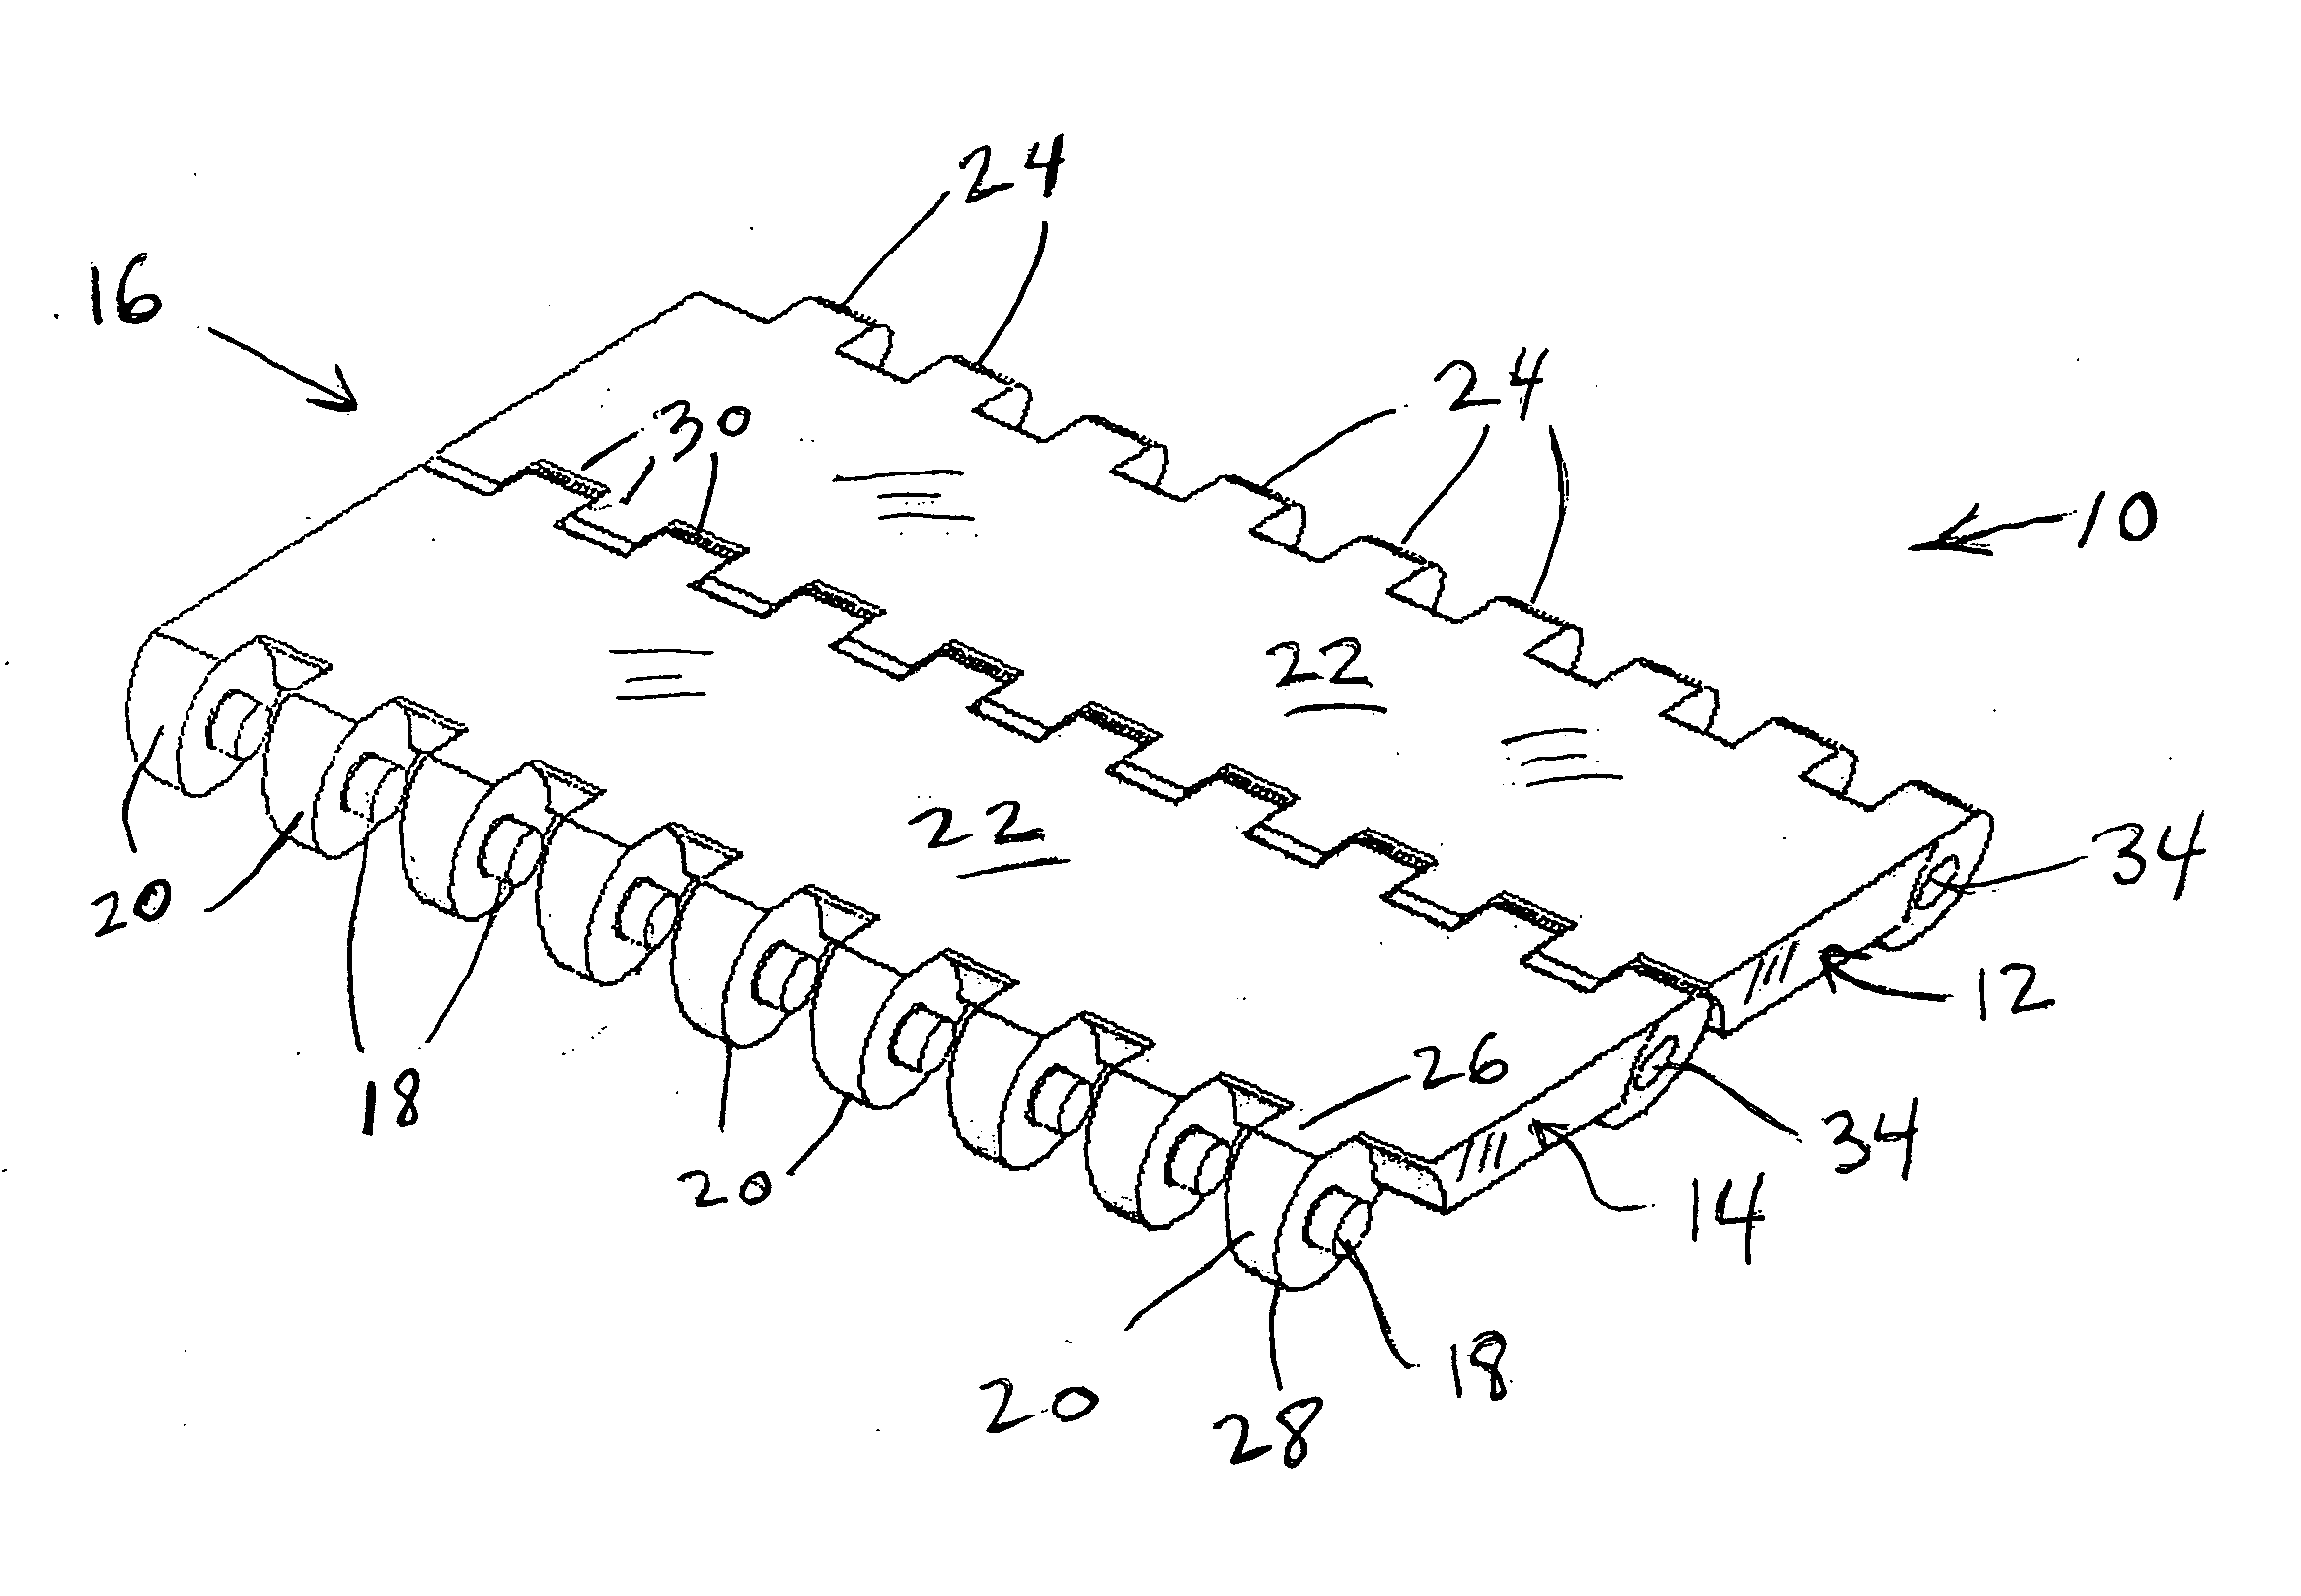 Rodless modular conveyor belt